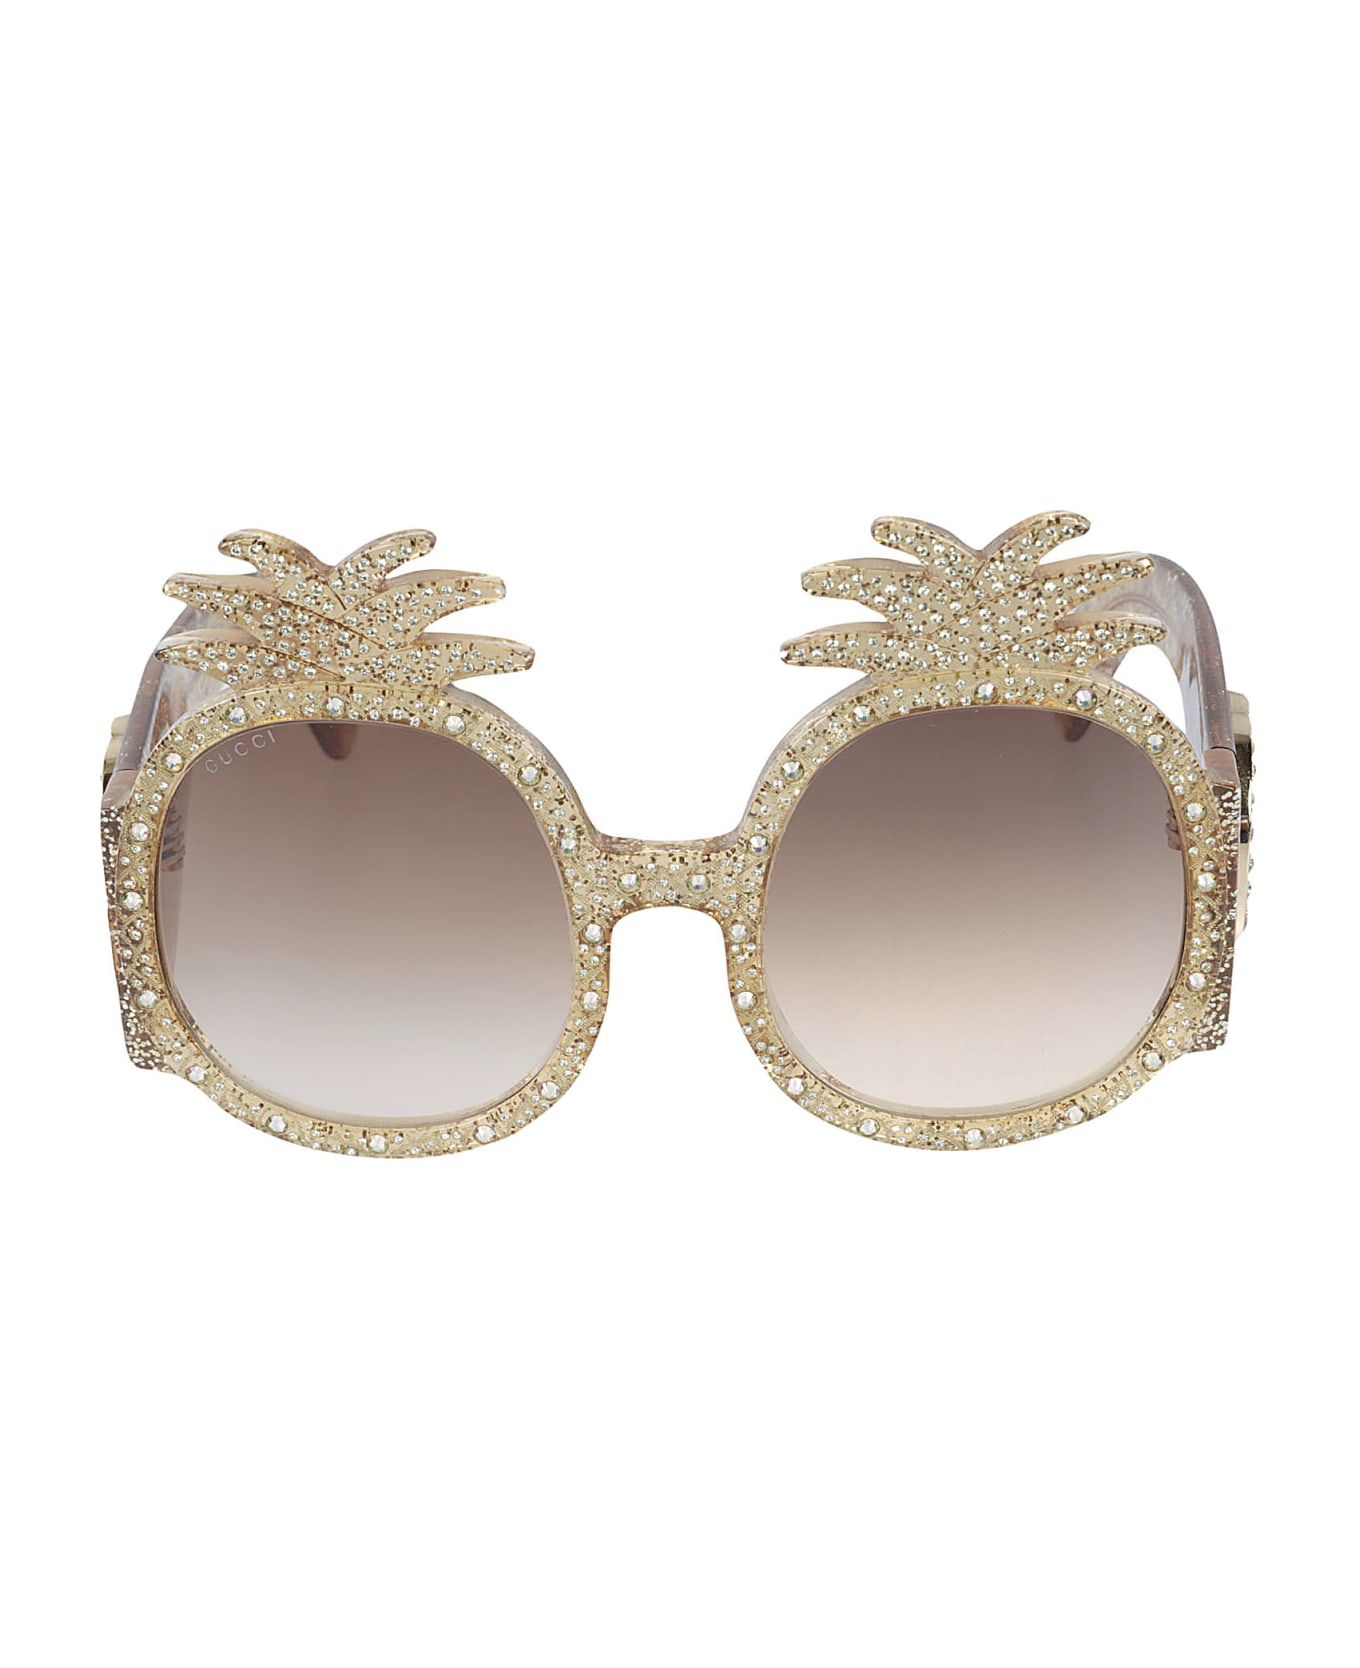 Gucci Eyewear Embellished Frame Sunglasses - 001 gold gold brown サングラス